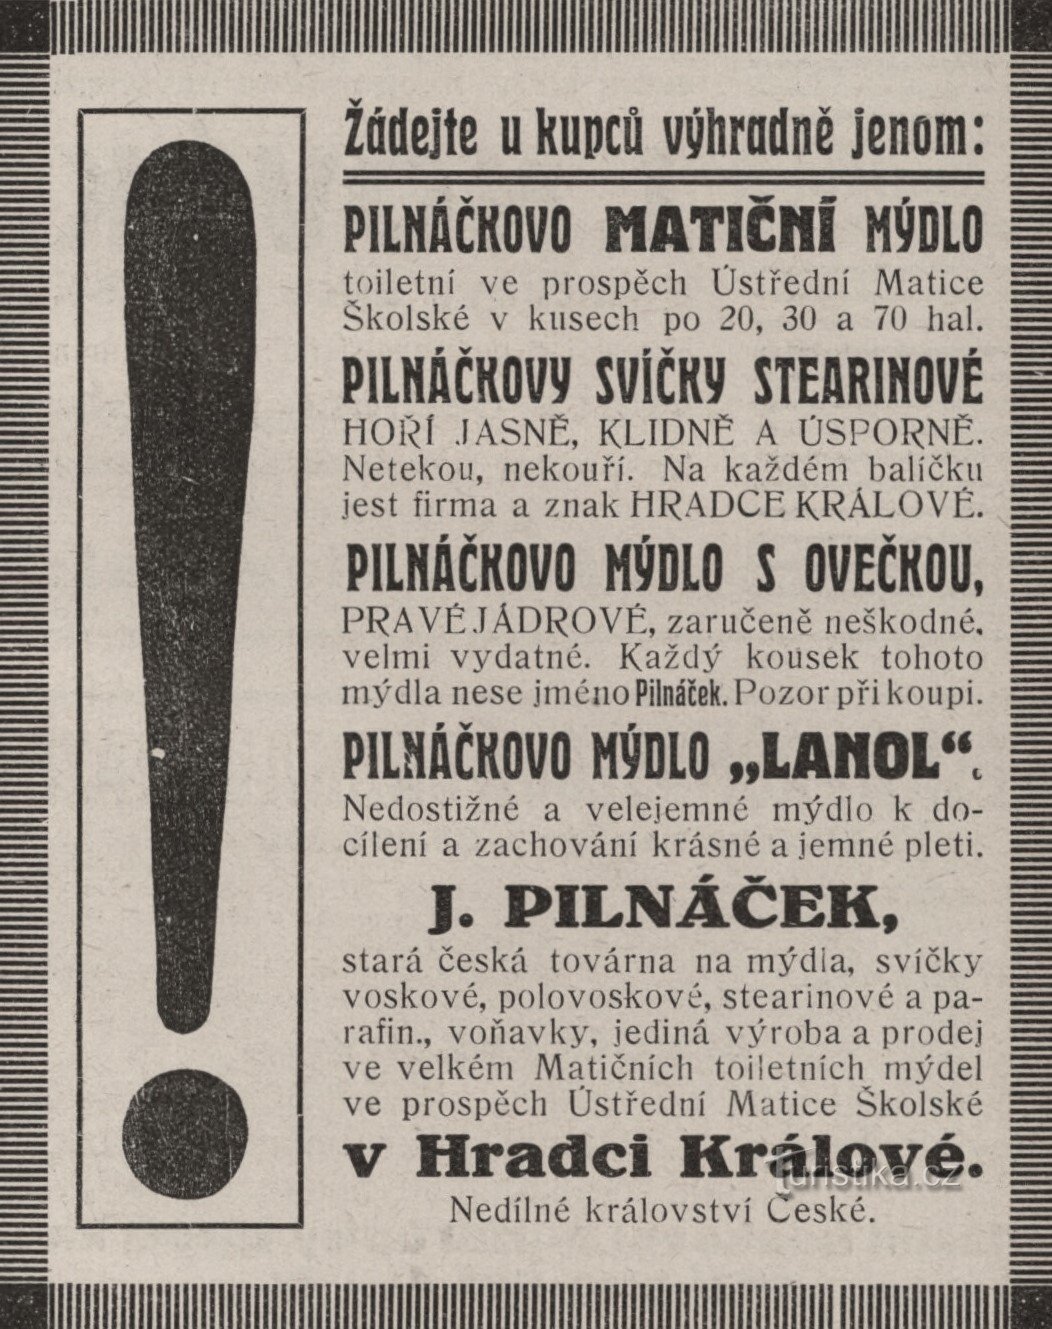 Advertisement of the Pilnáček plant from 1912